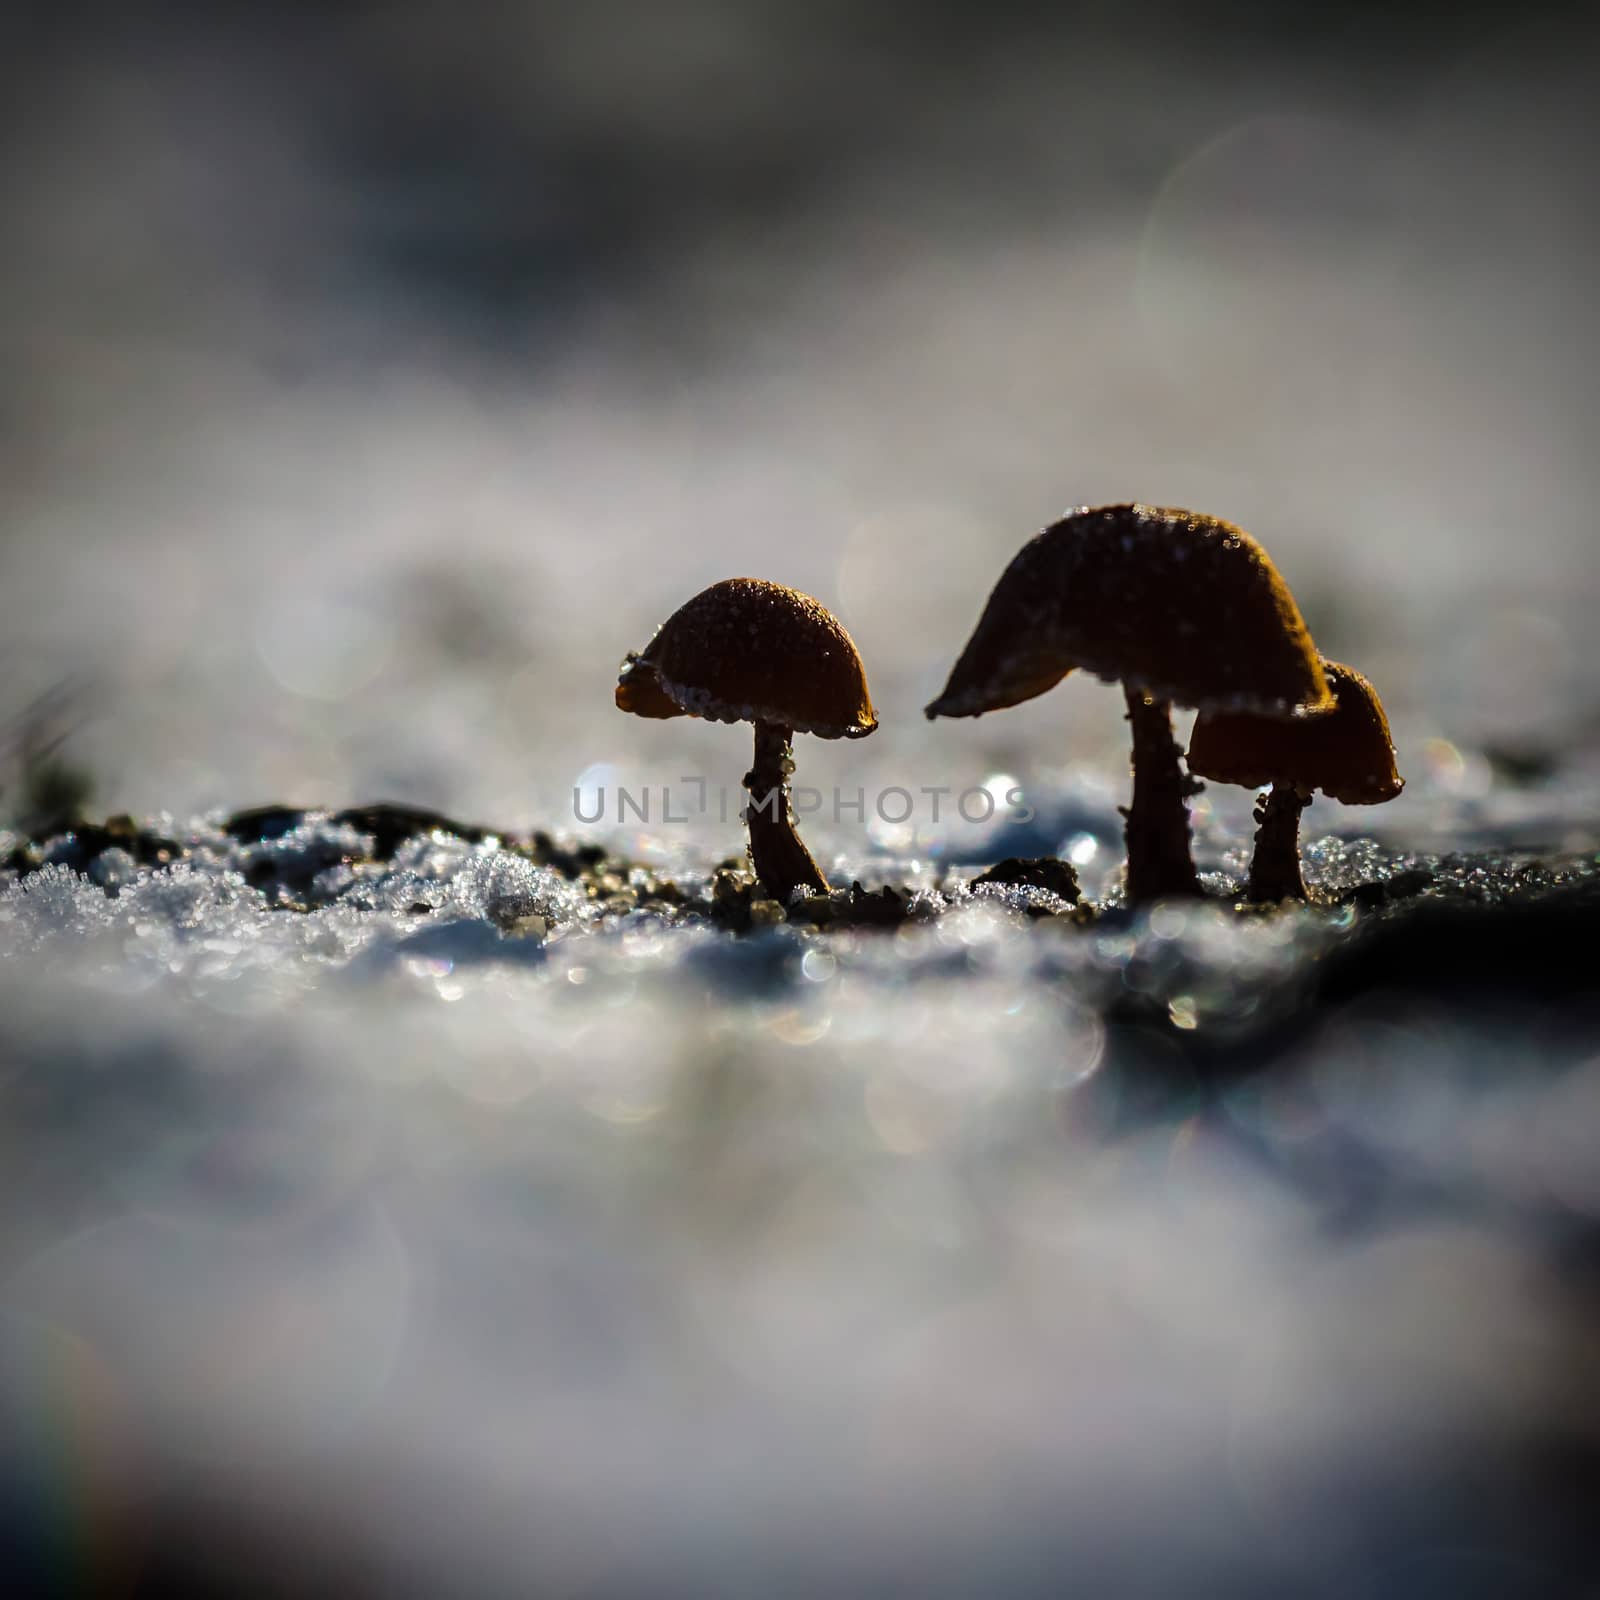 forest mushroom in moss after bir longtime rain